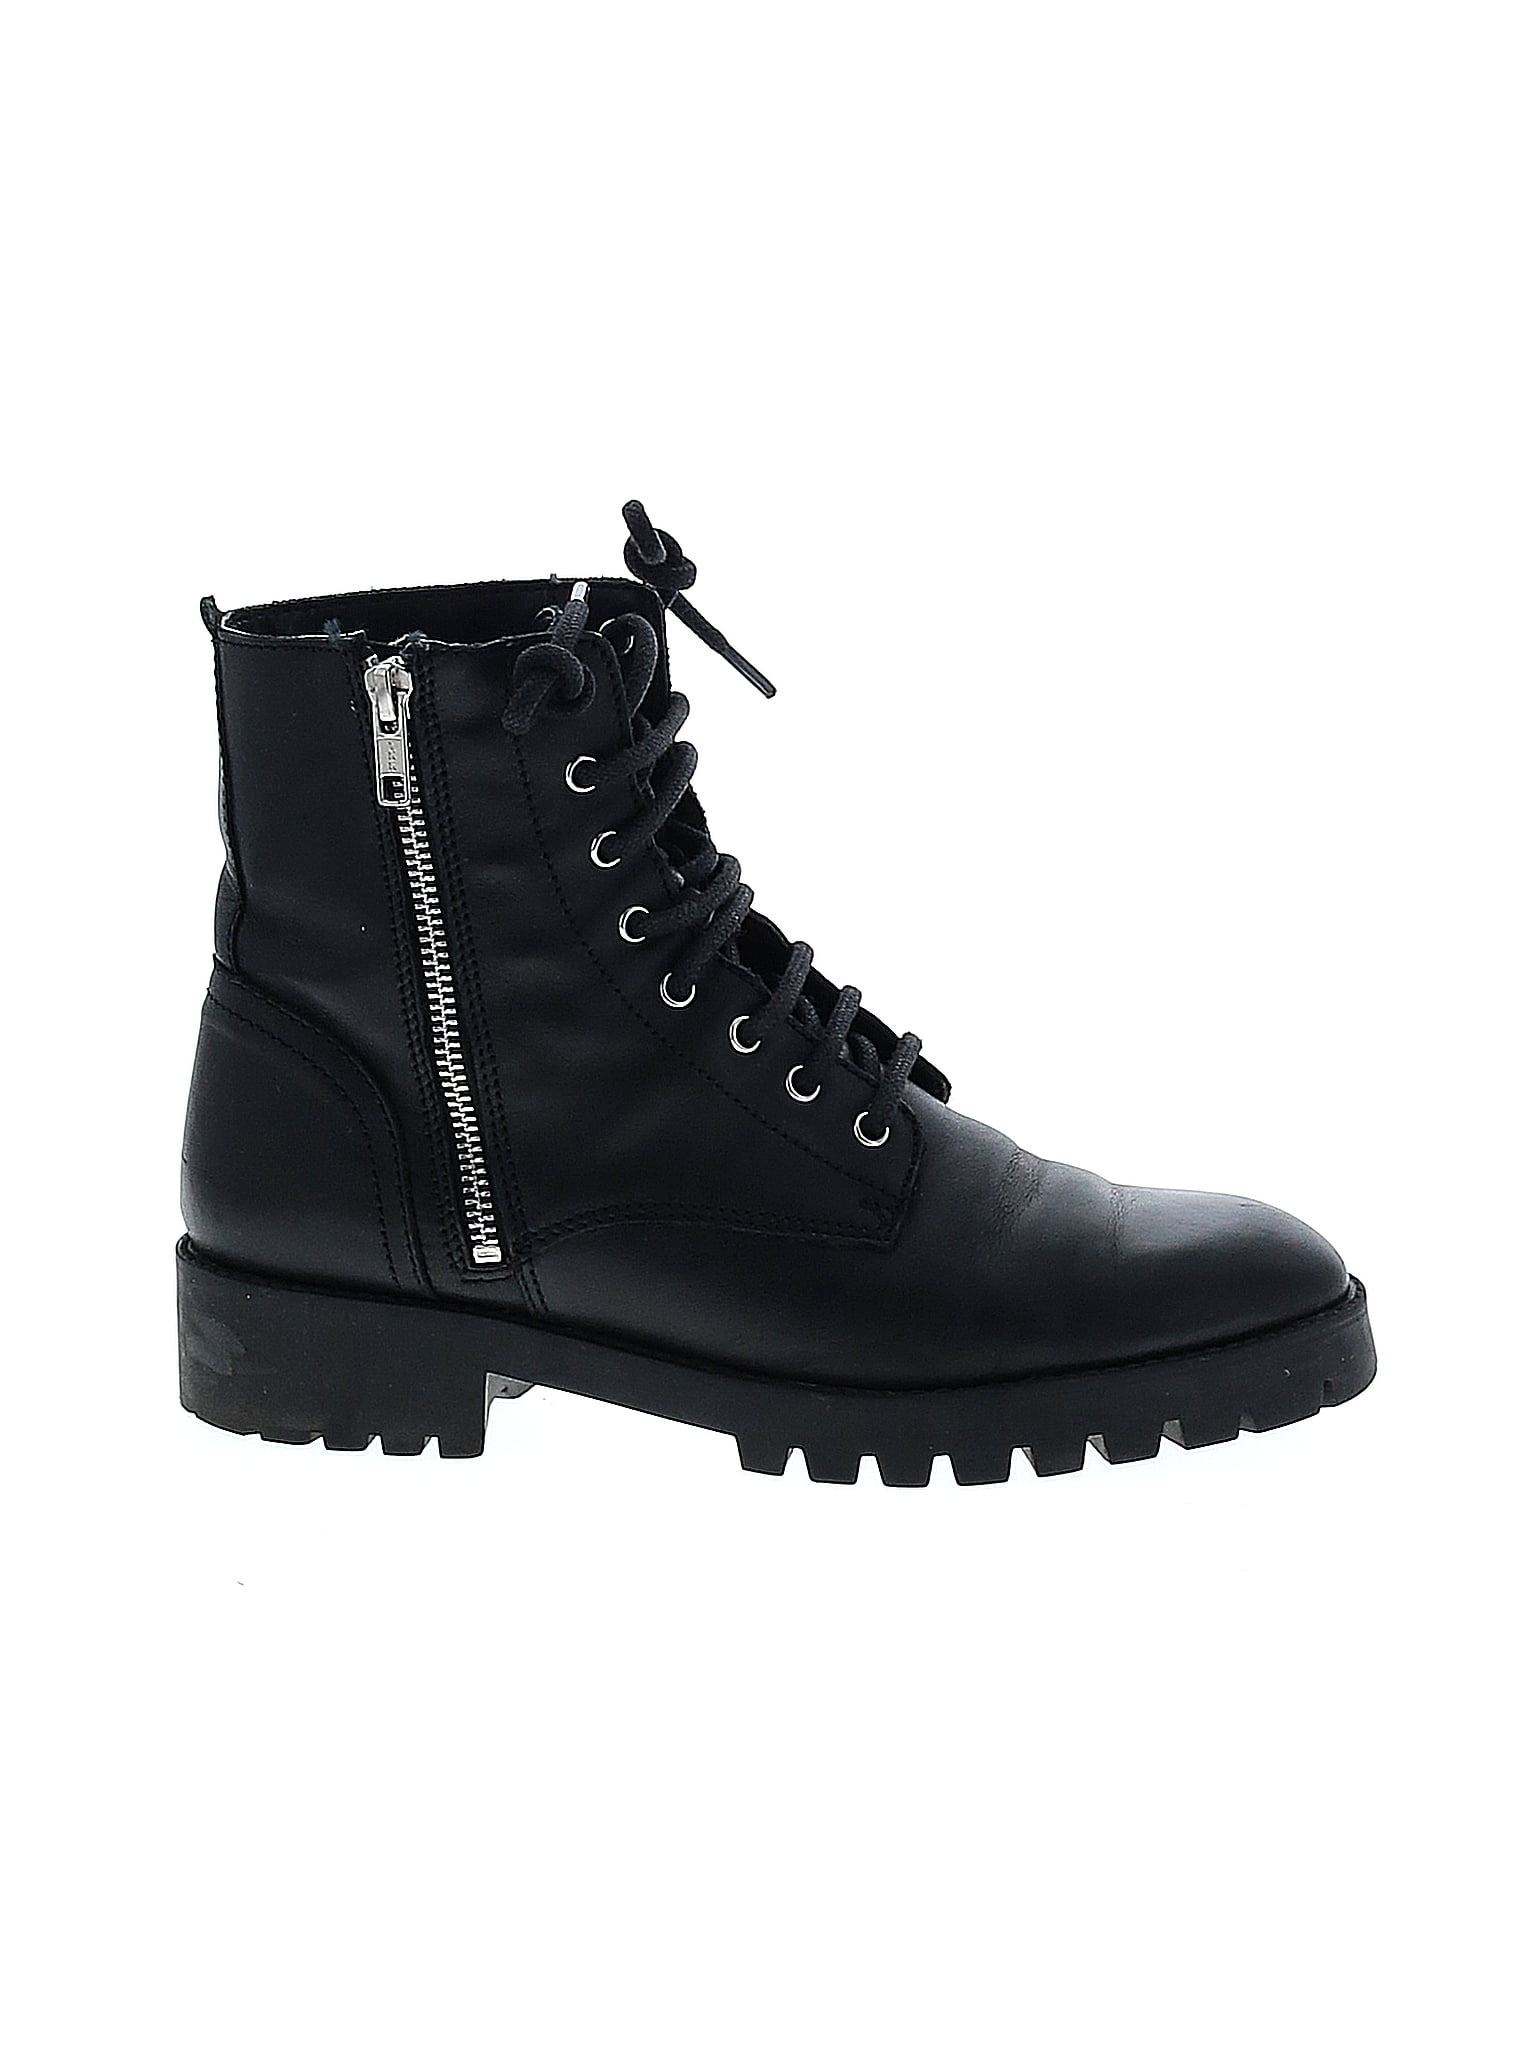 MNG Solid Black Boots Size 38 (EU) - 43% off | thredUP